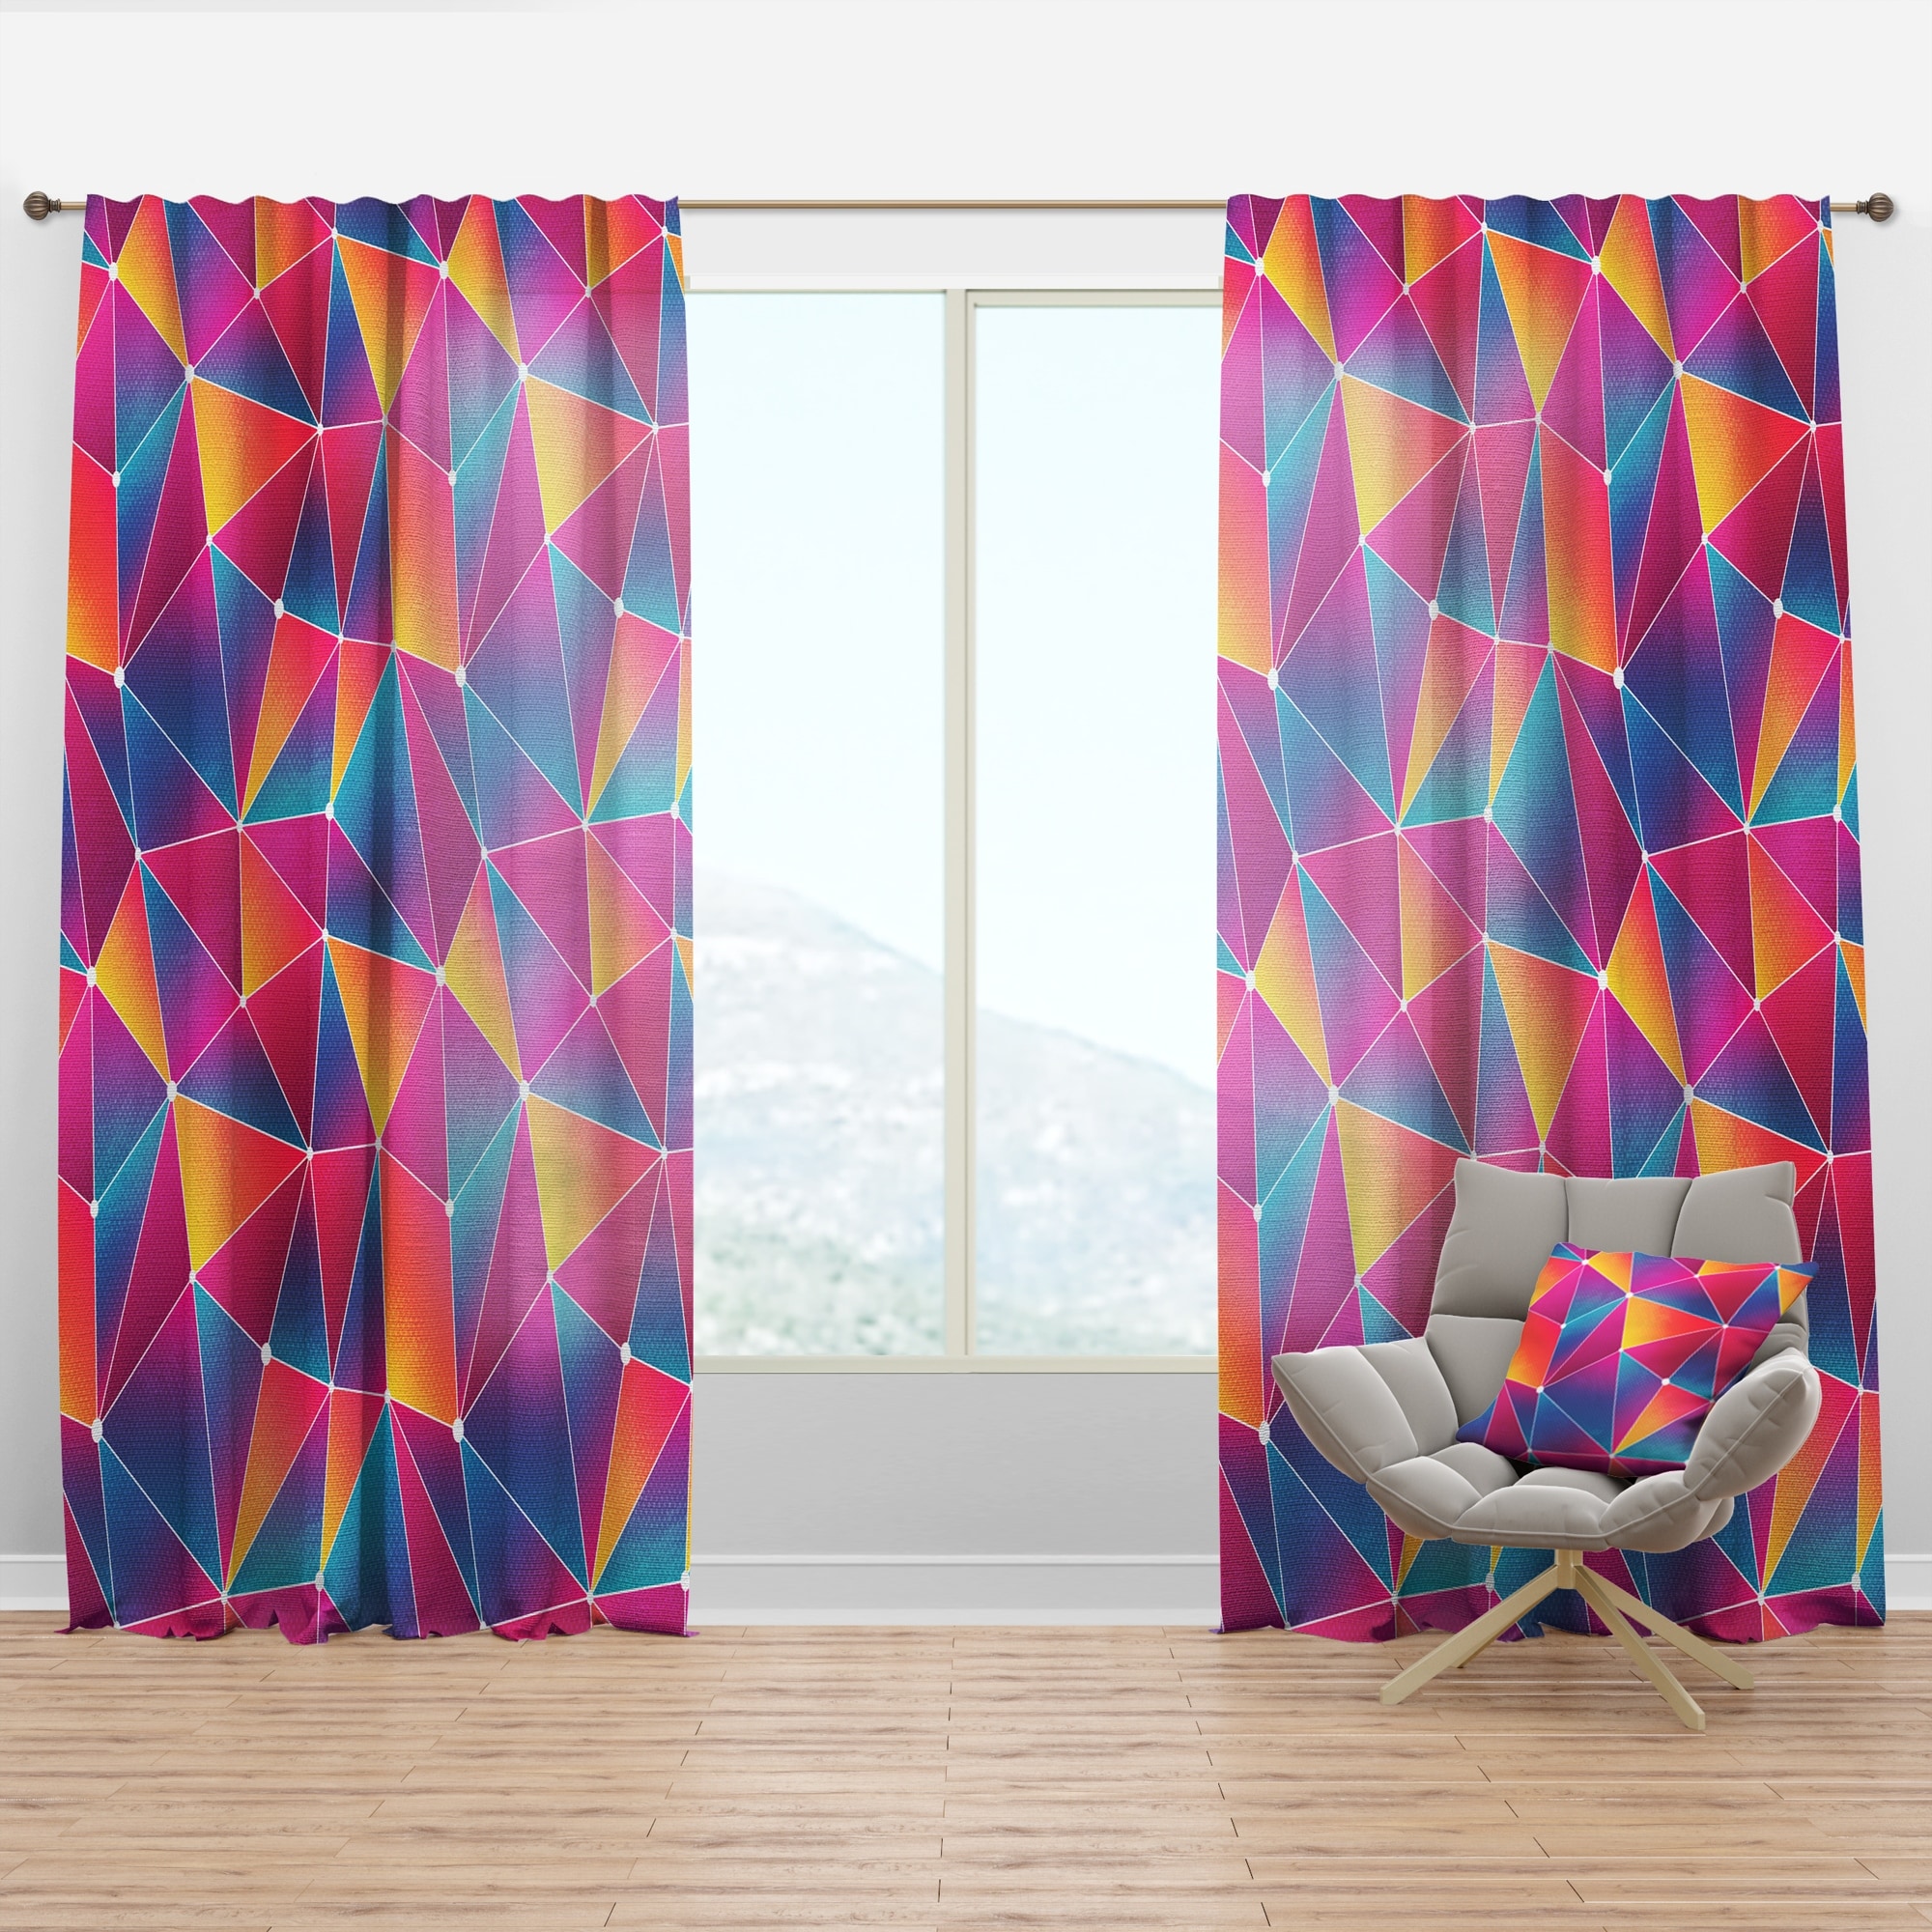 Designart 'Bright Triangle with Grunge Effect' Modern Curtain Panel